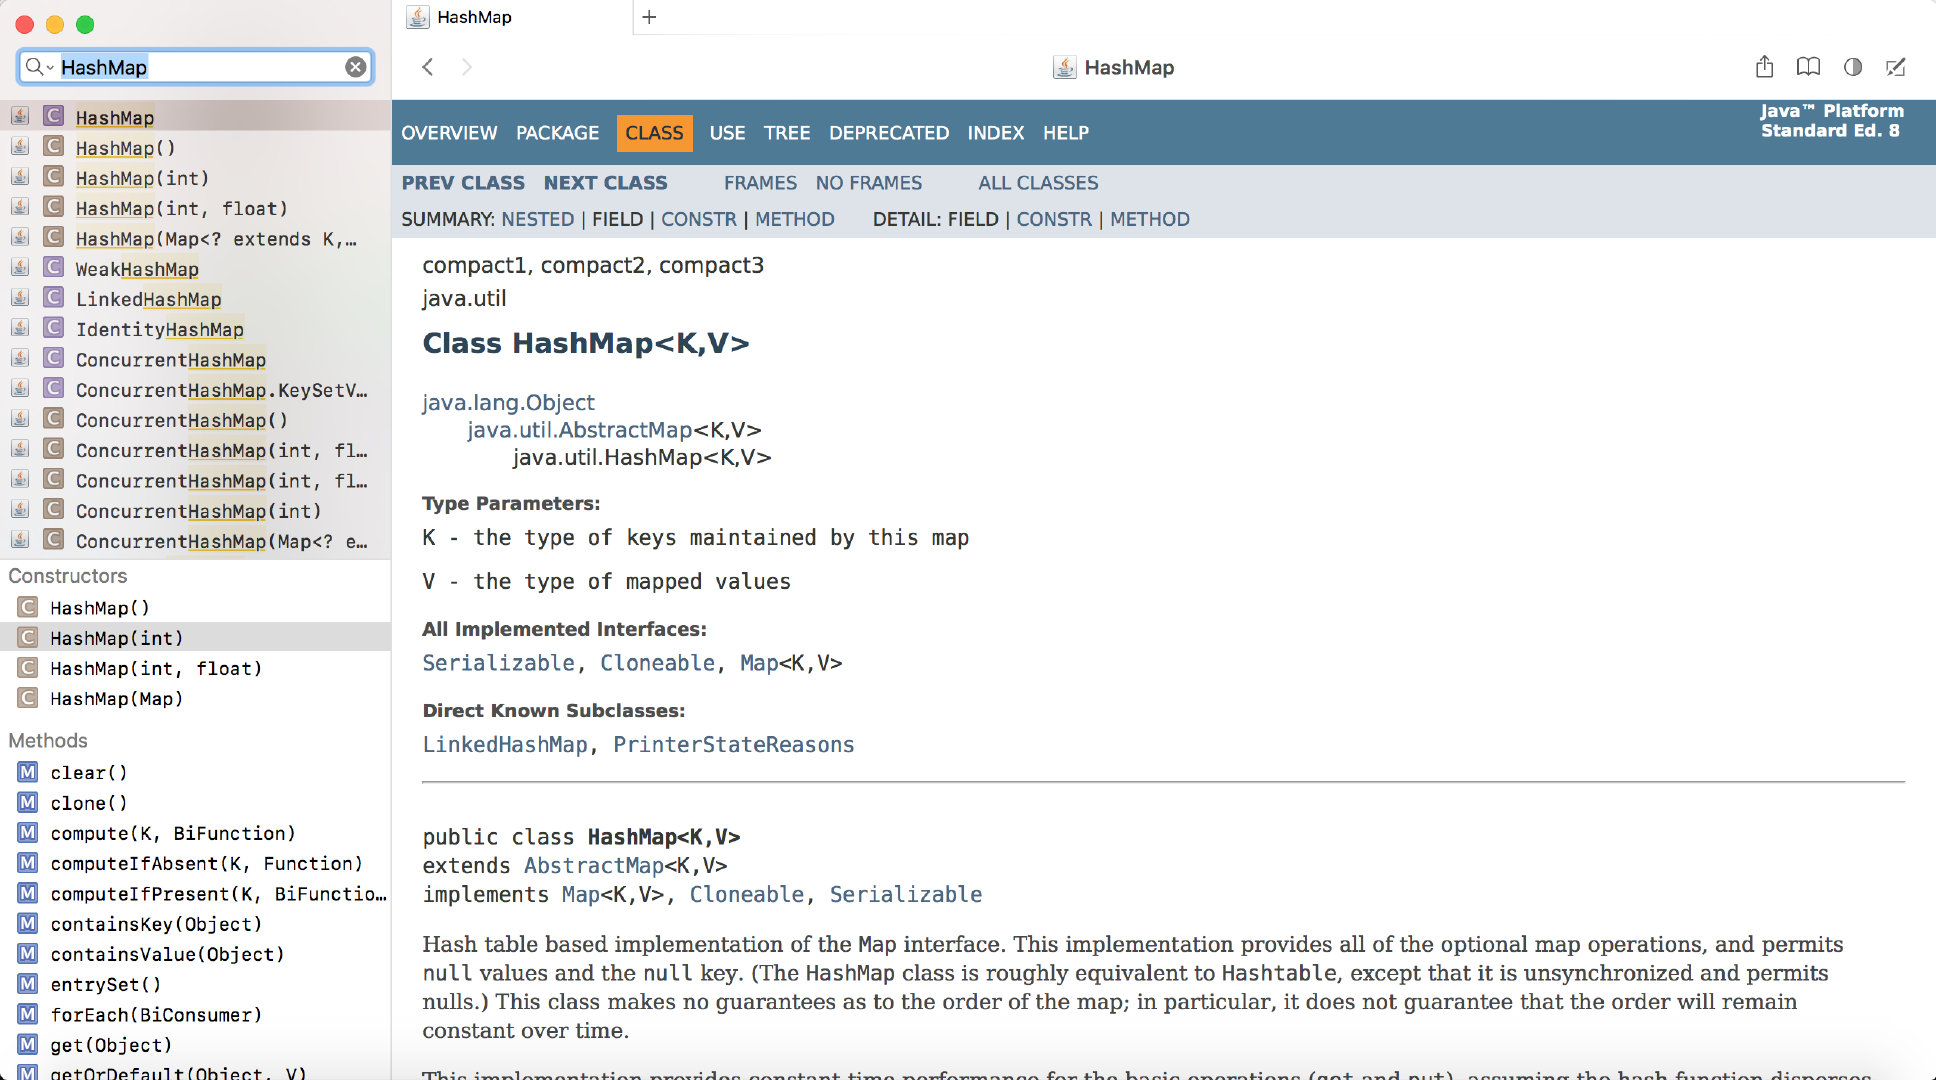 下载完Java文档，搜索HashMap